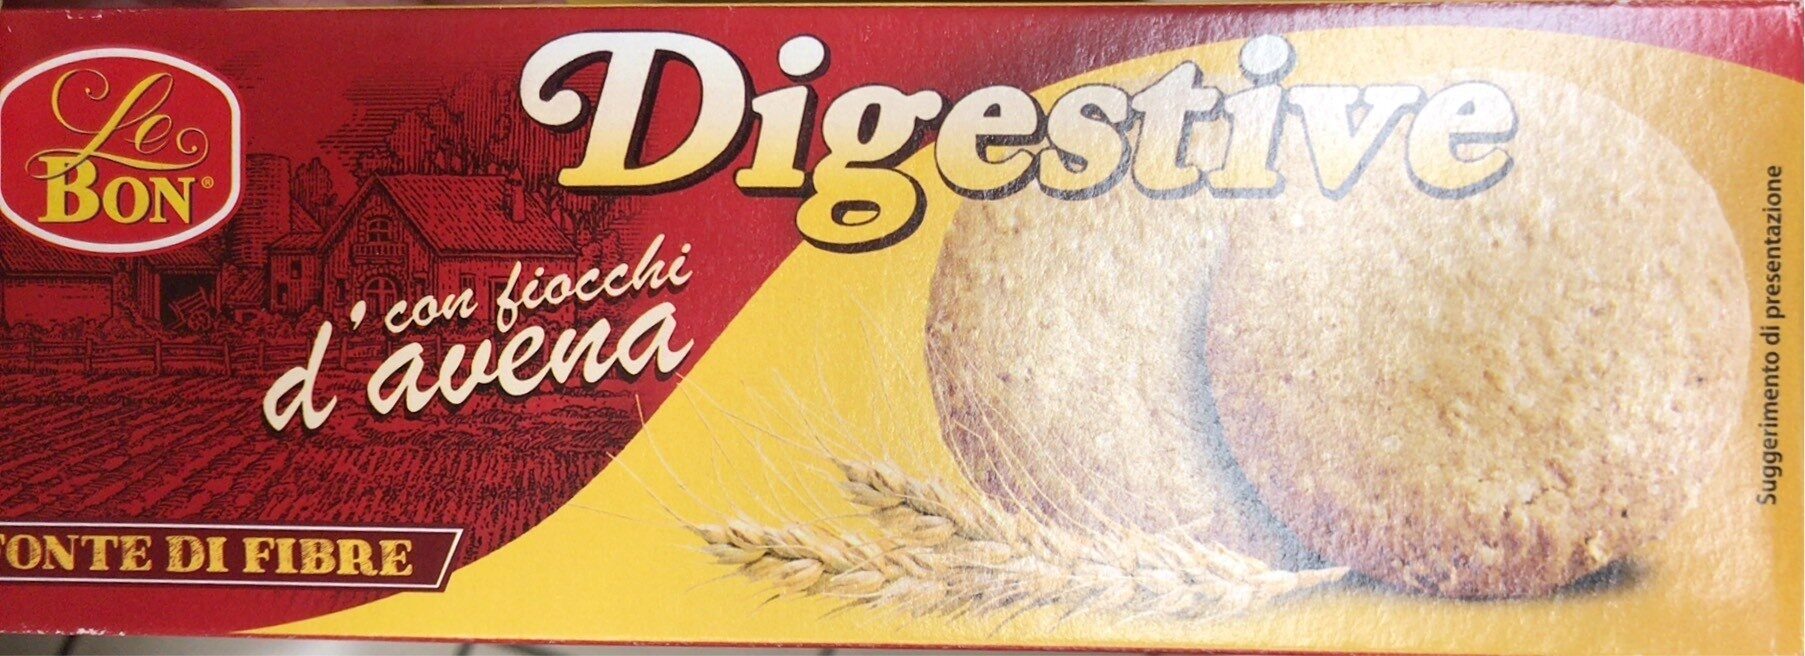 Digestive con fiocchi d'avena - Product - it